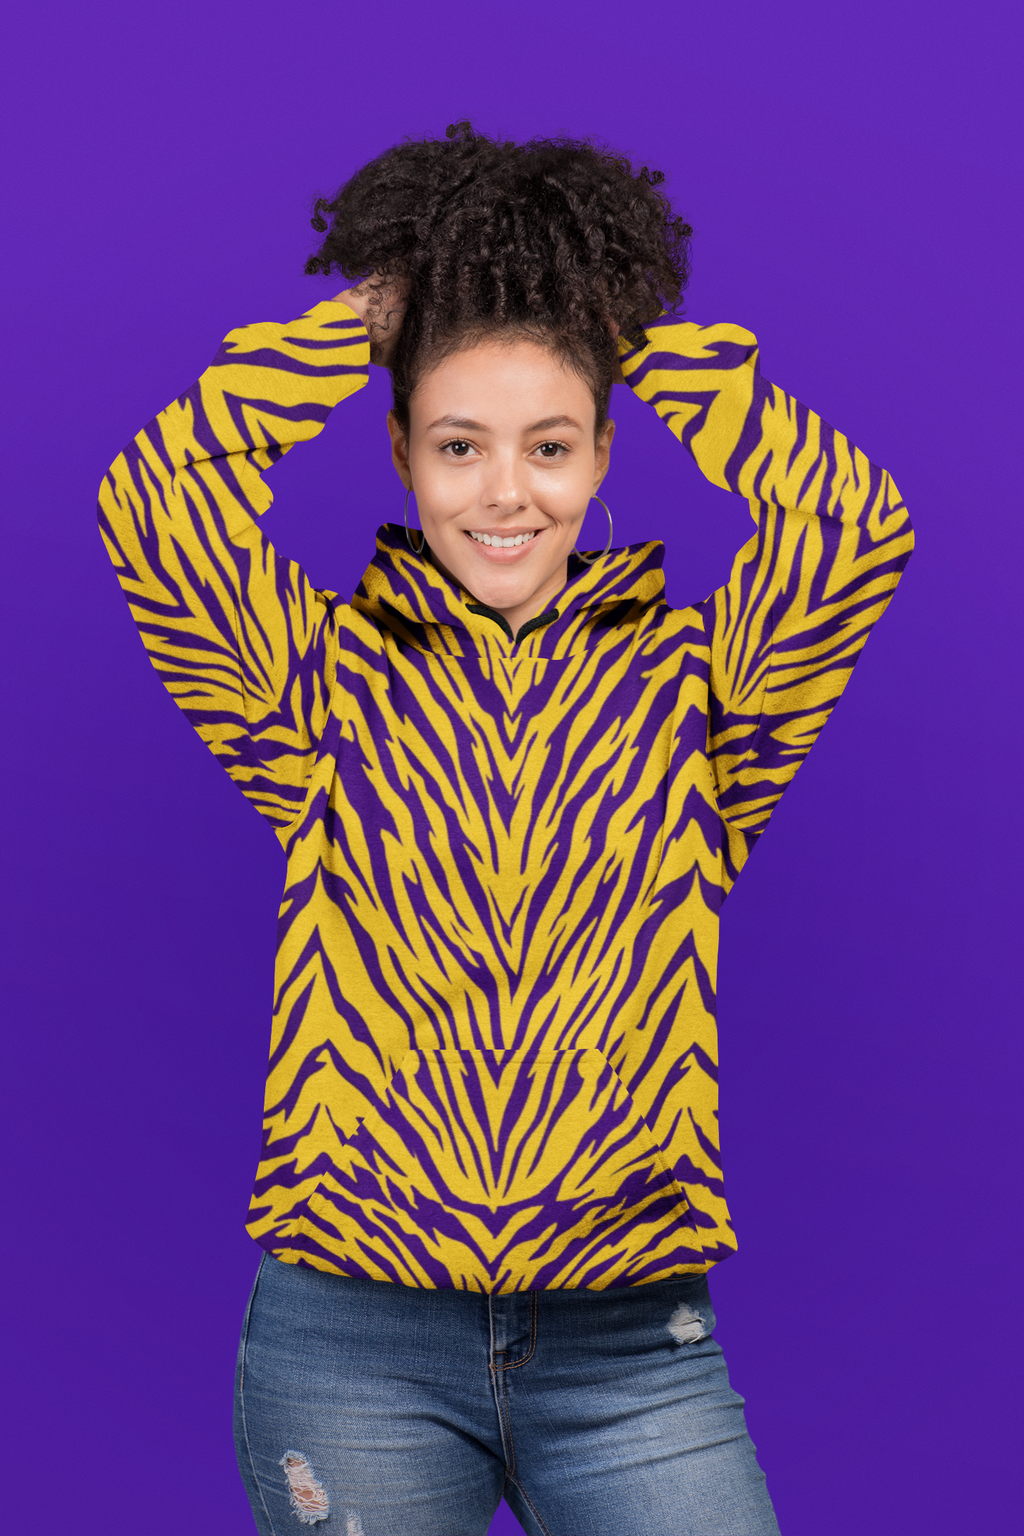 Purple and Gold Tiger Stripe Unisex Hoodie